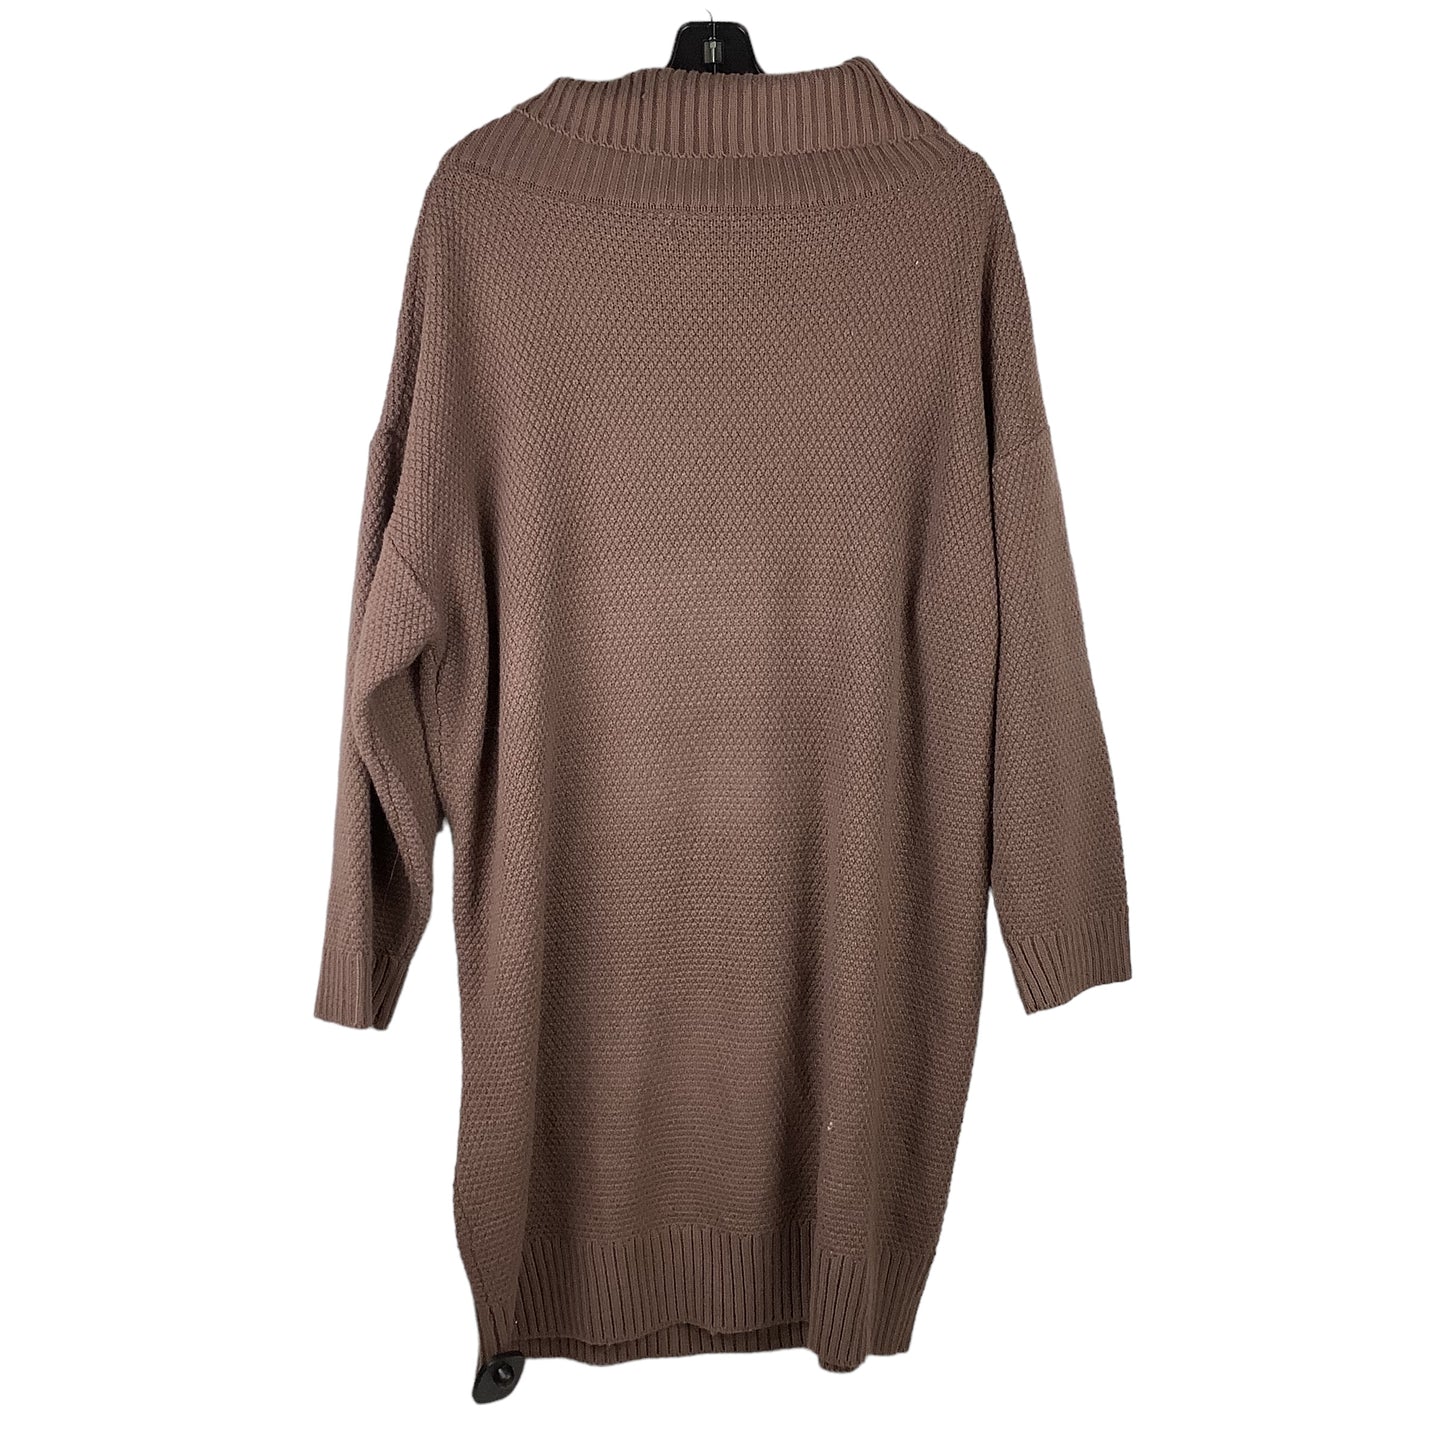 Dress Sweater By Robbie Bee  Size: L